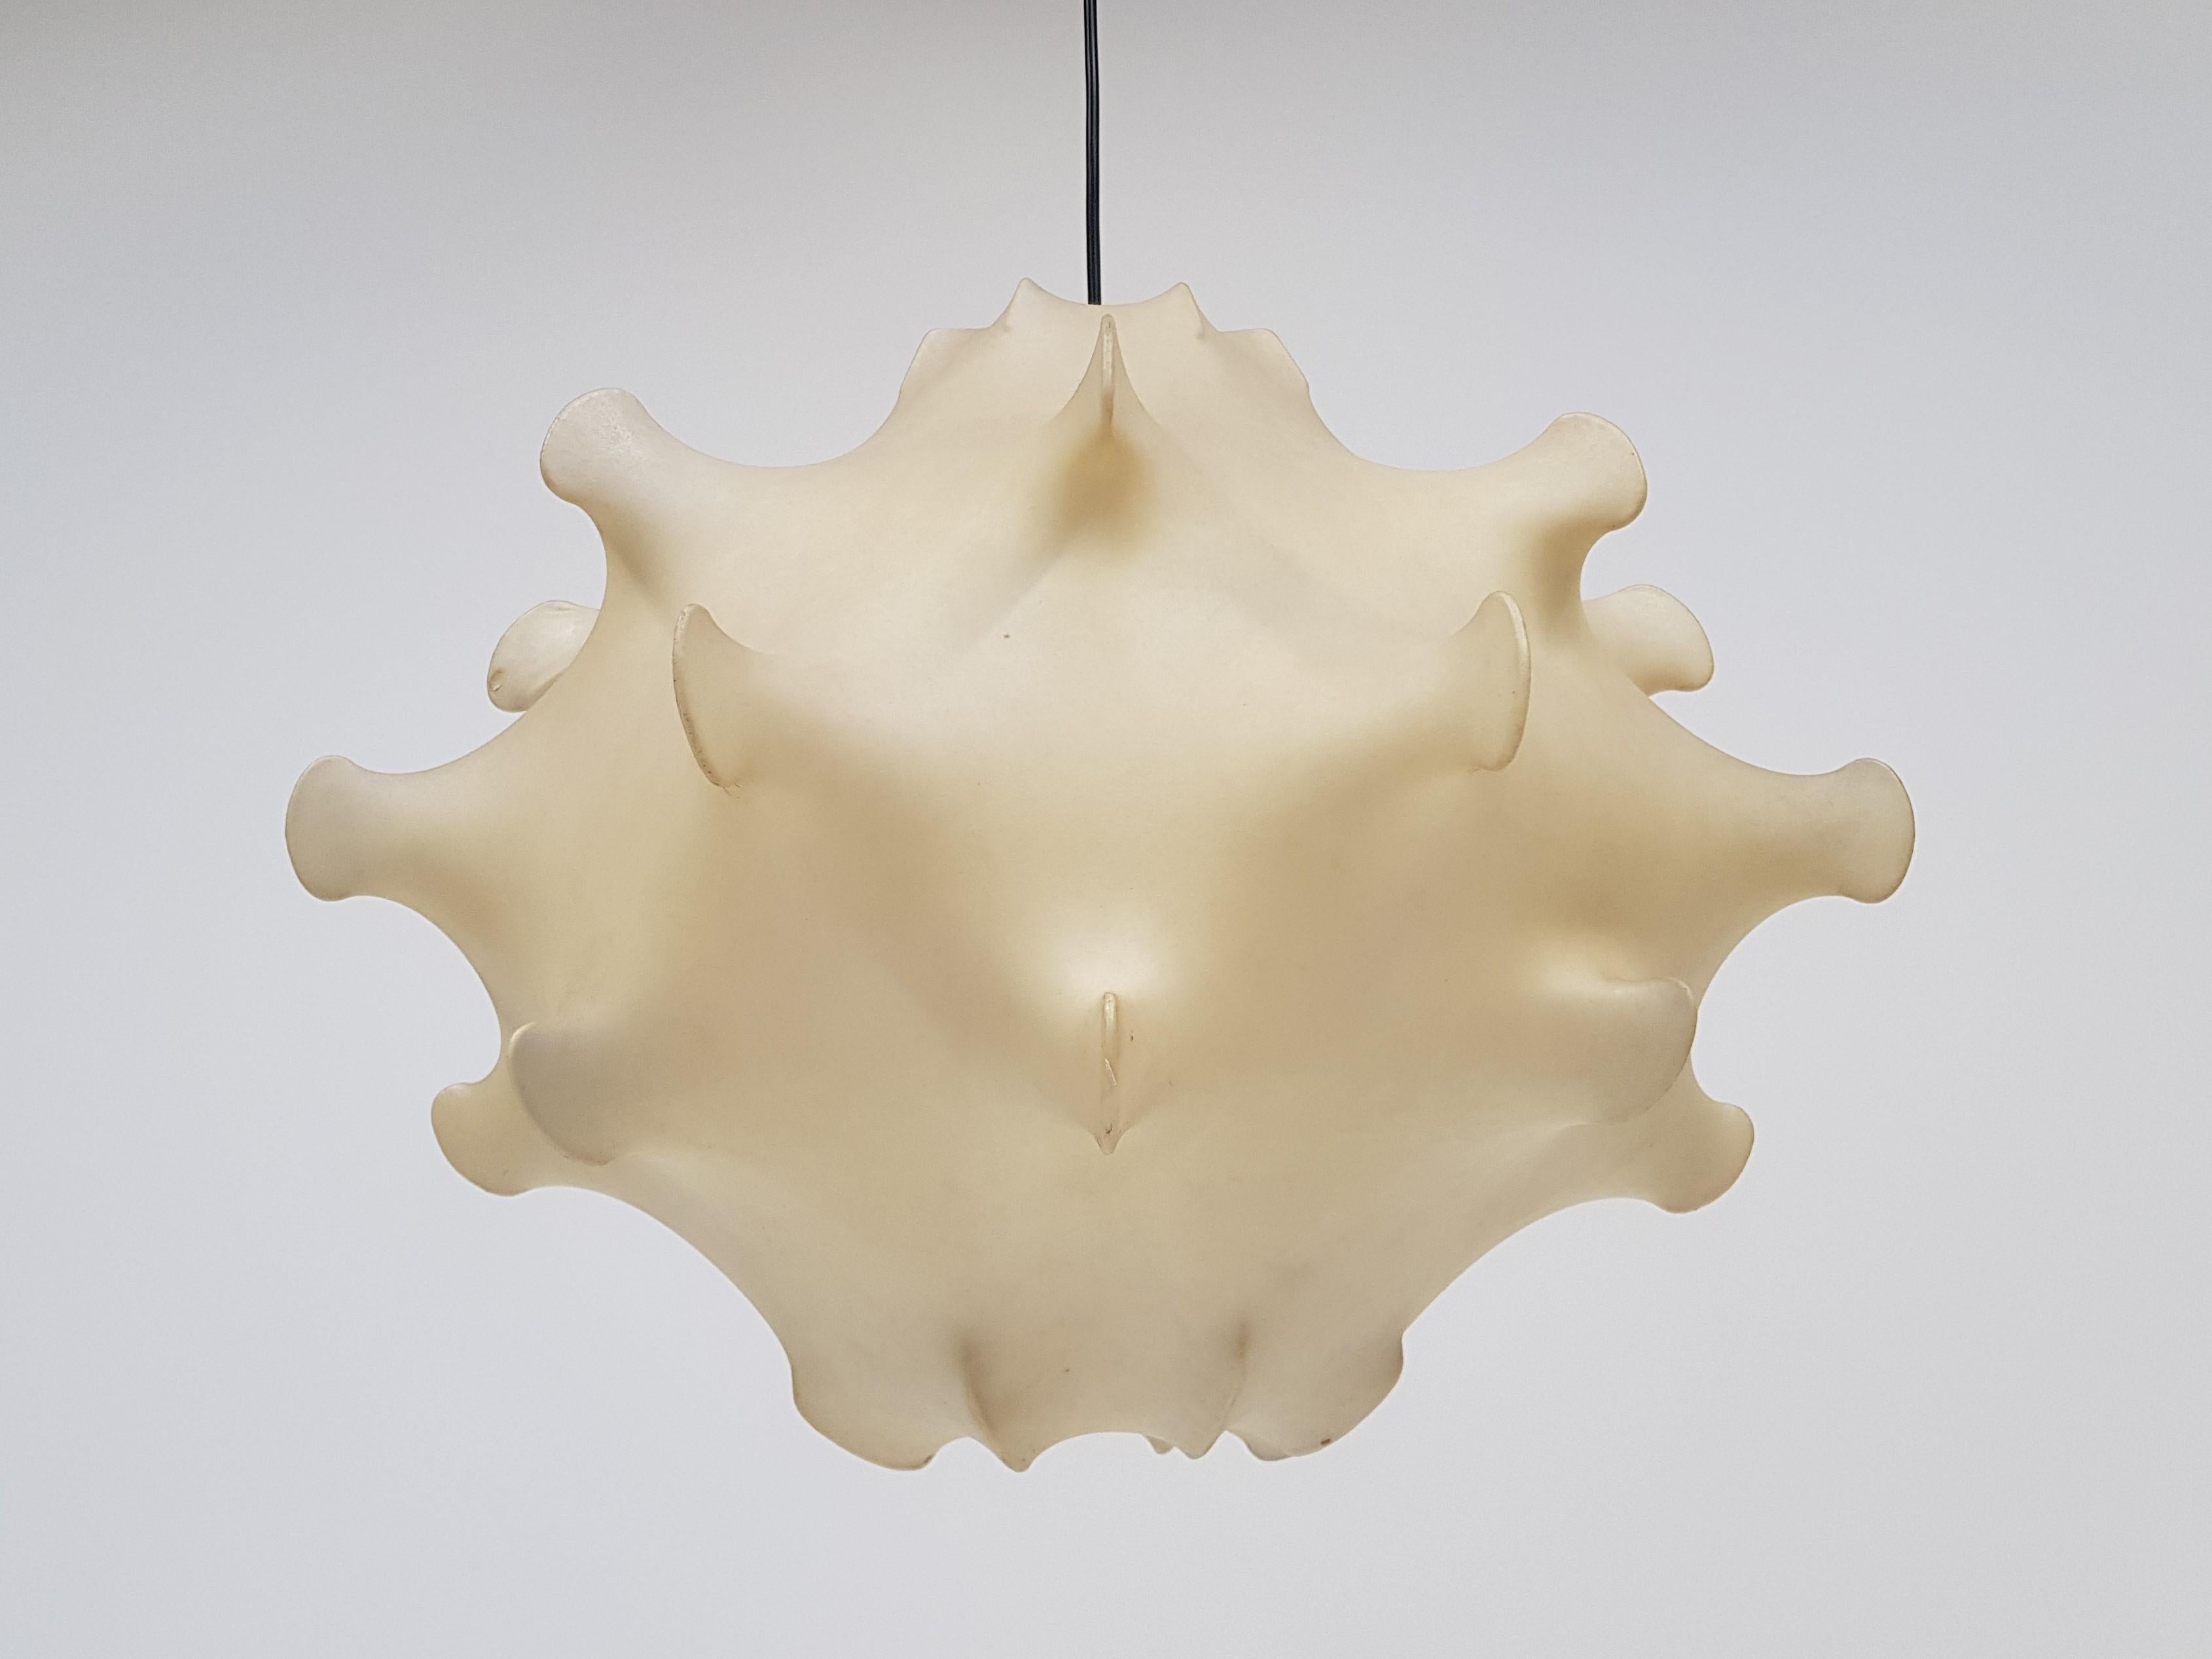 Italian 'Taraxacum' cocoon pendant by Achille & Pier Castiglioni for Flos, 1960s